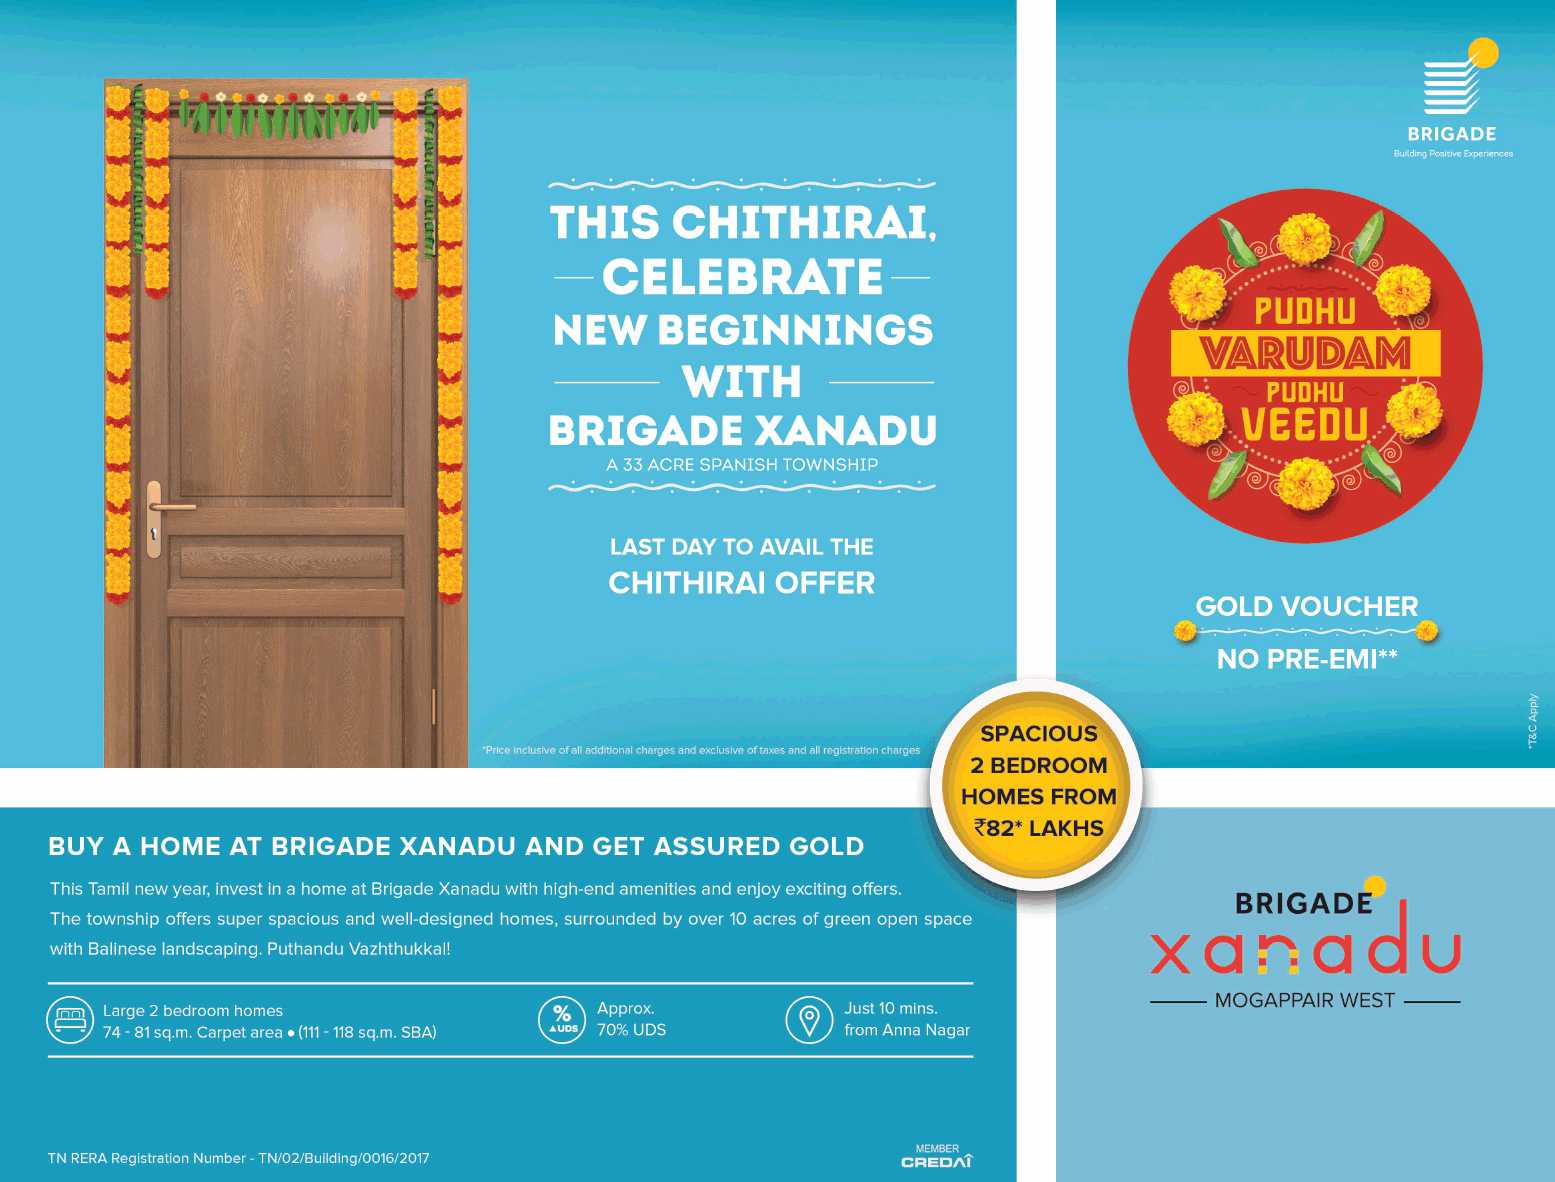 Get assured gold by booking home at Brigade Xanadu in Chennai Update